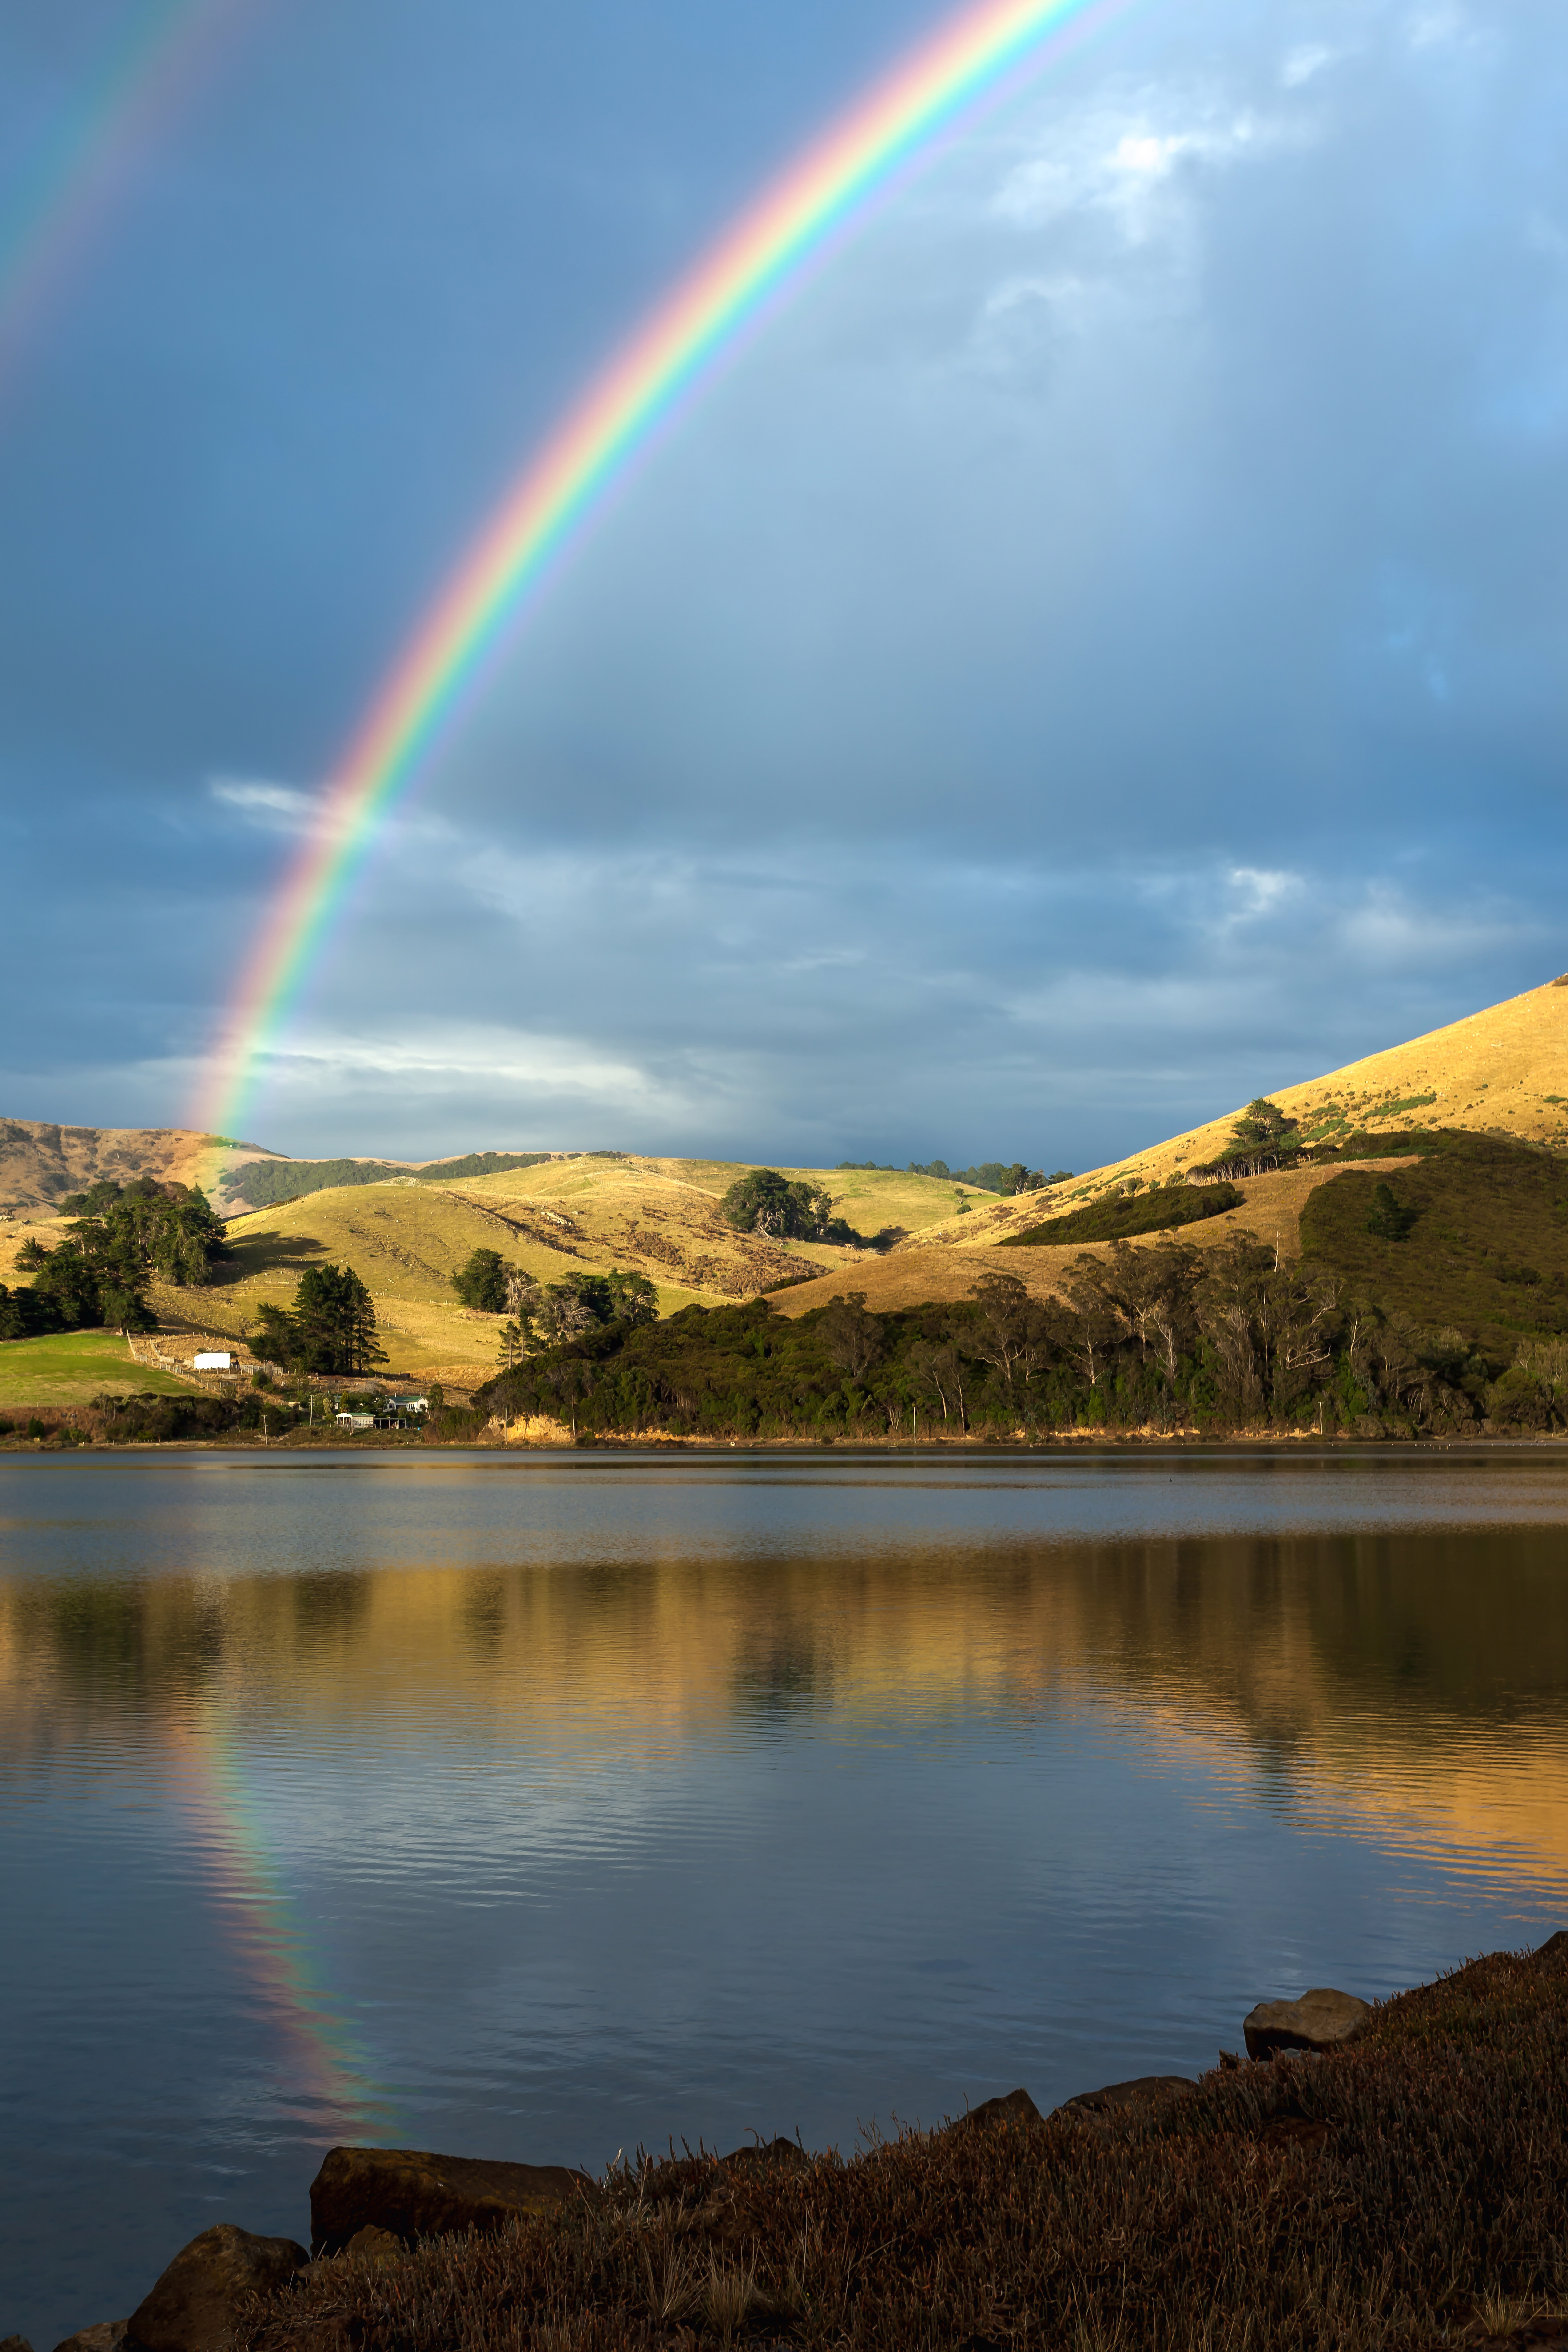 Rainbow over lake and hills